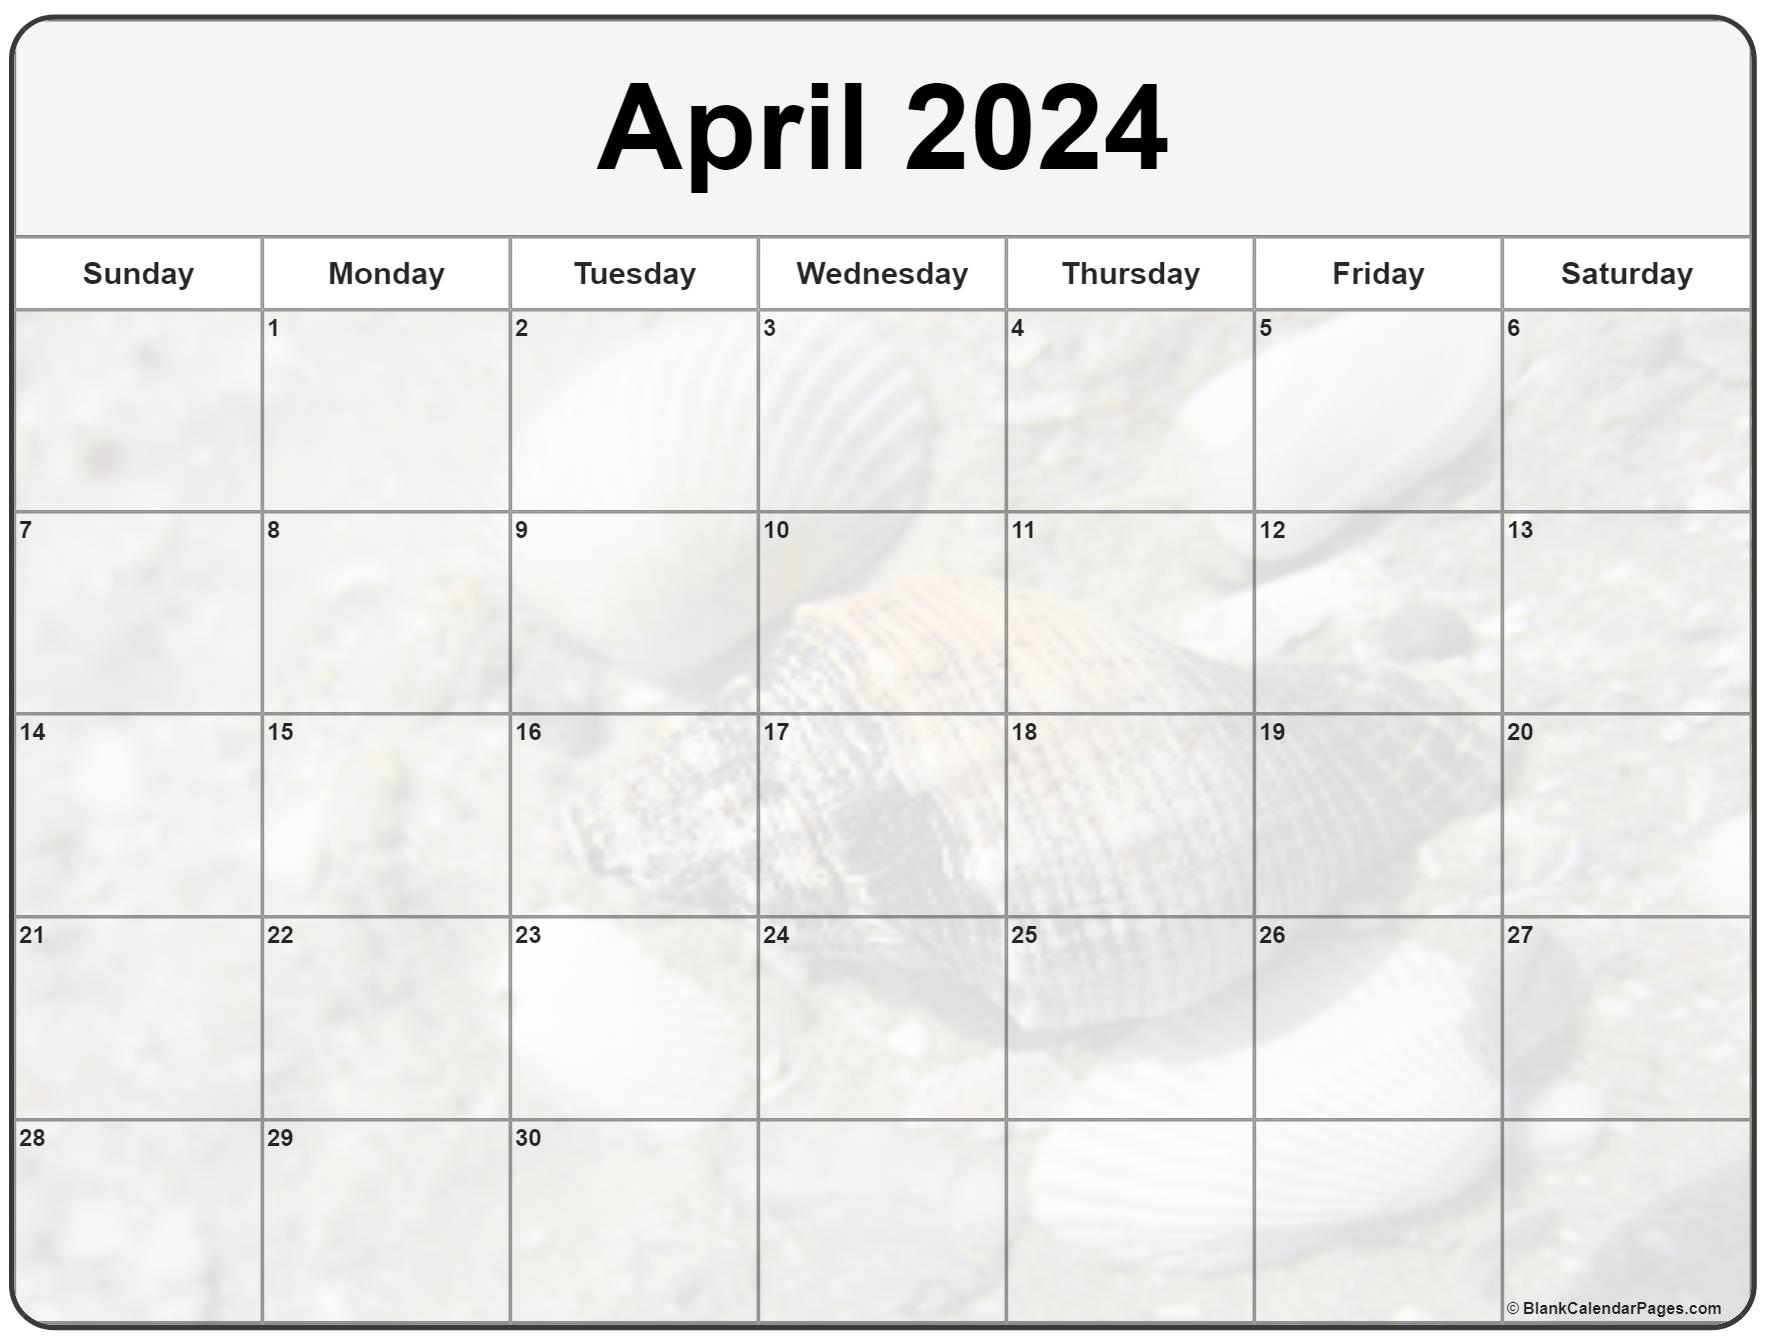 Игры месяца апрель 2024. Календарь октябрь 2022. Календарь октябрь ноябрь 2022. Календарь январь 2022. Календарь июль 2022.